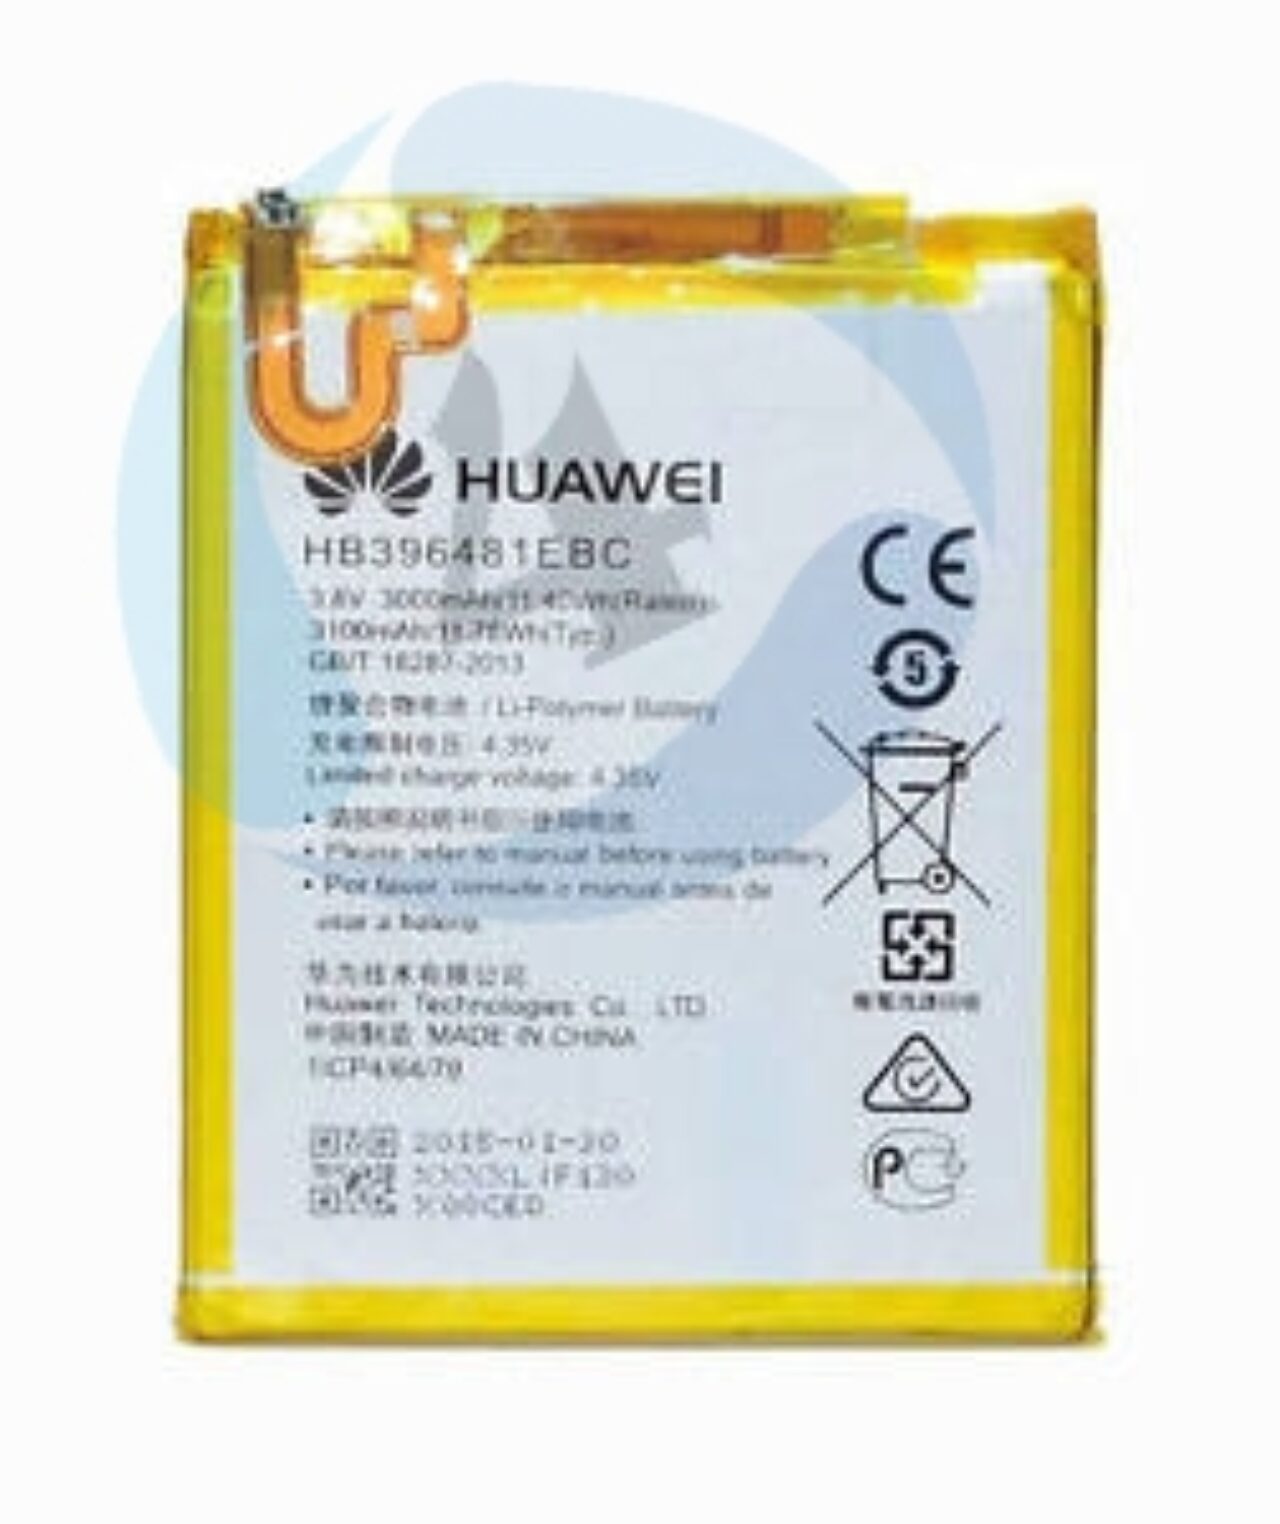 Huawei G8 Battery 3300 m Ah HB396481 EBC